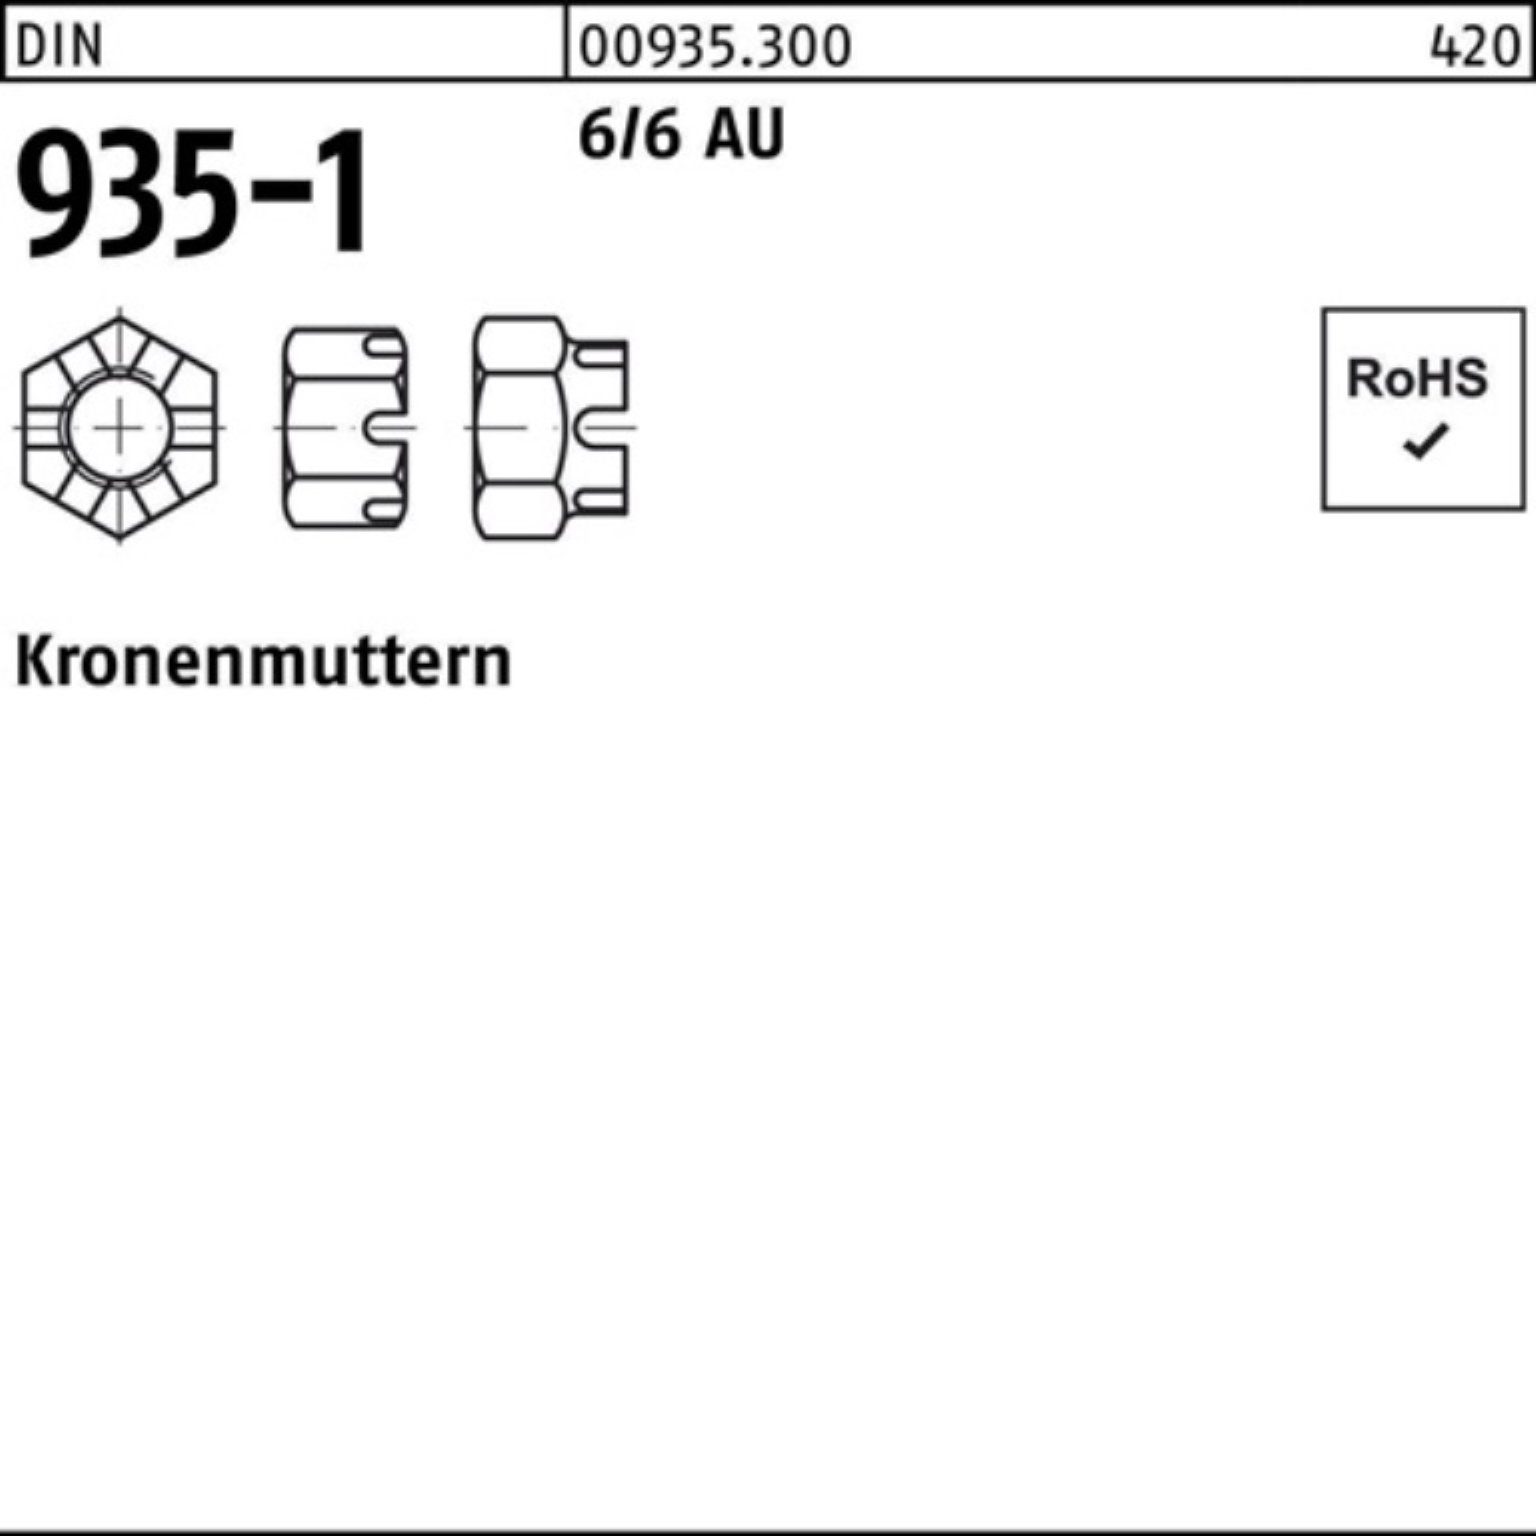 Reyher Kronenmutter 250er 250 M16 935-1 Stück DIN Kronenmutter Automatenstahl Pack 6/6 DI